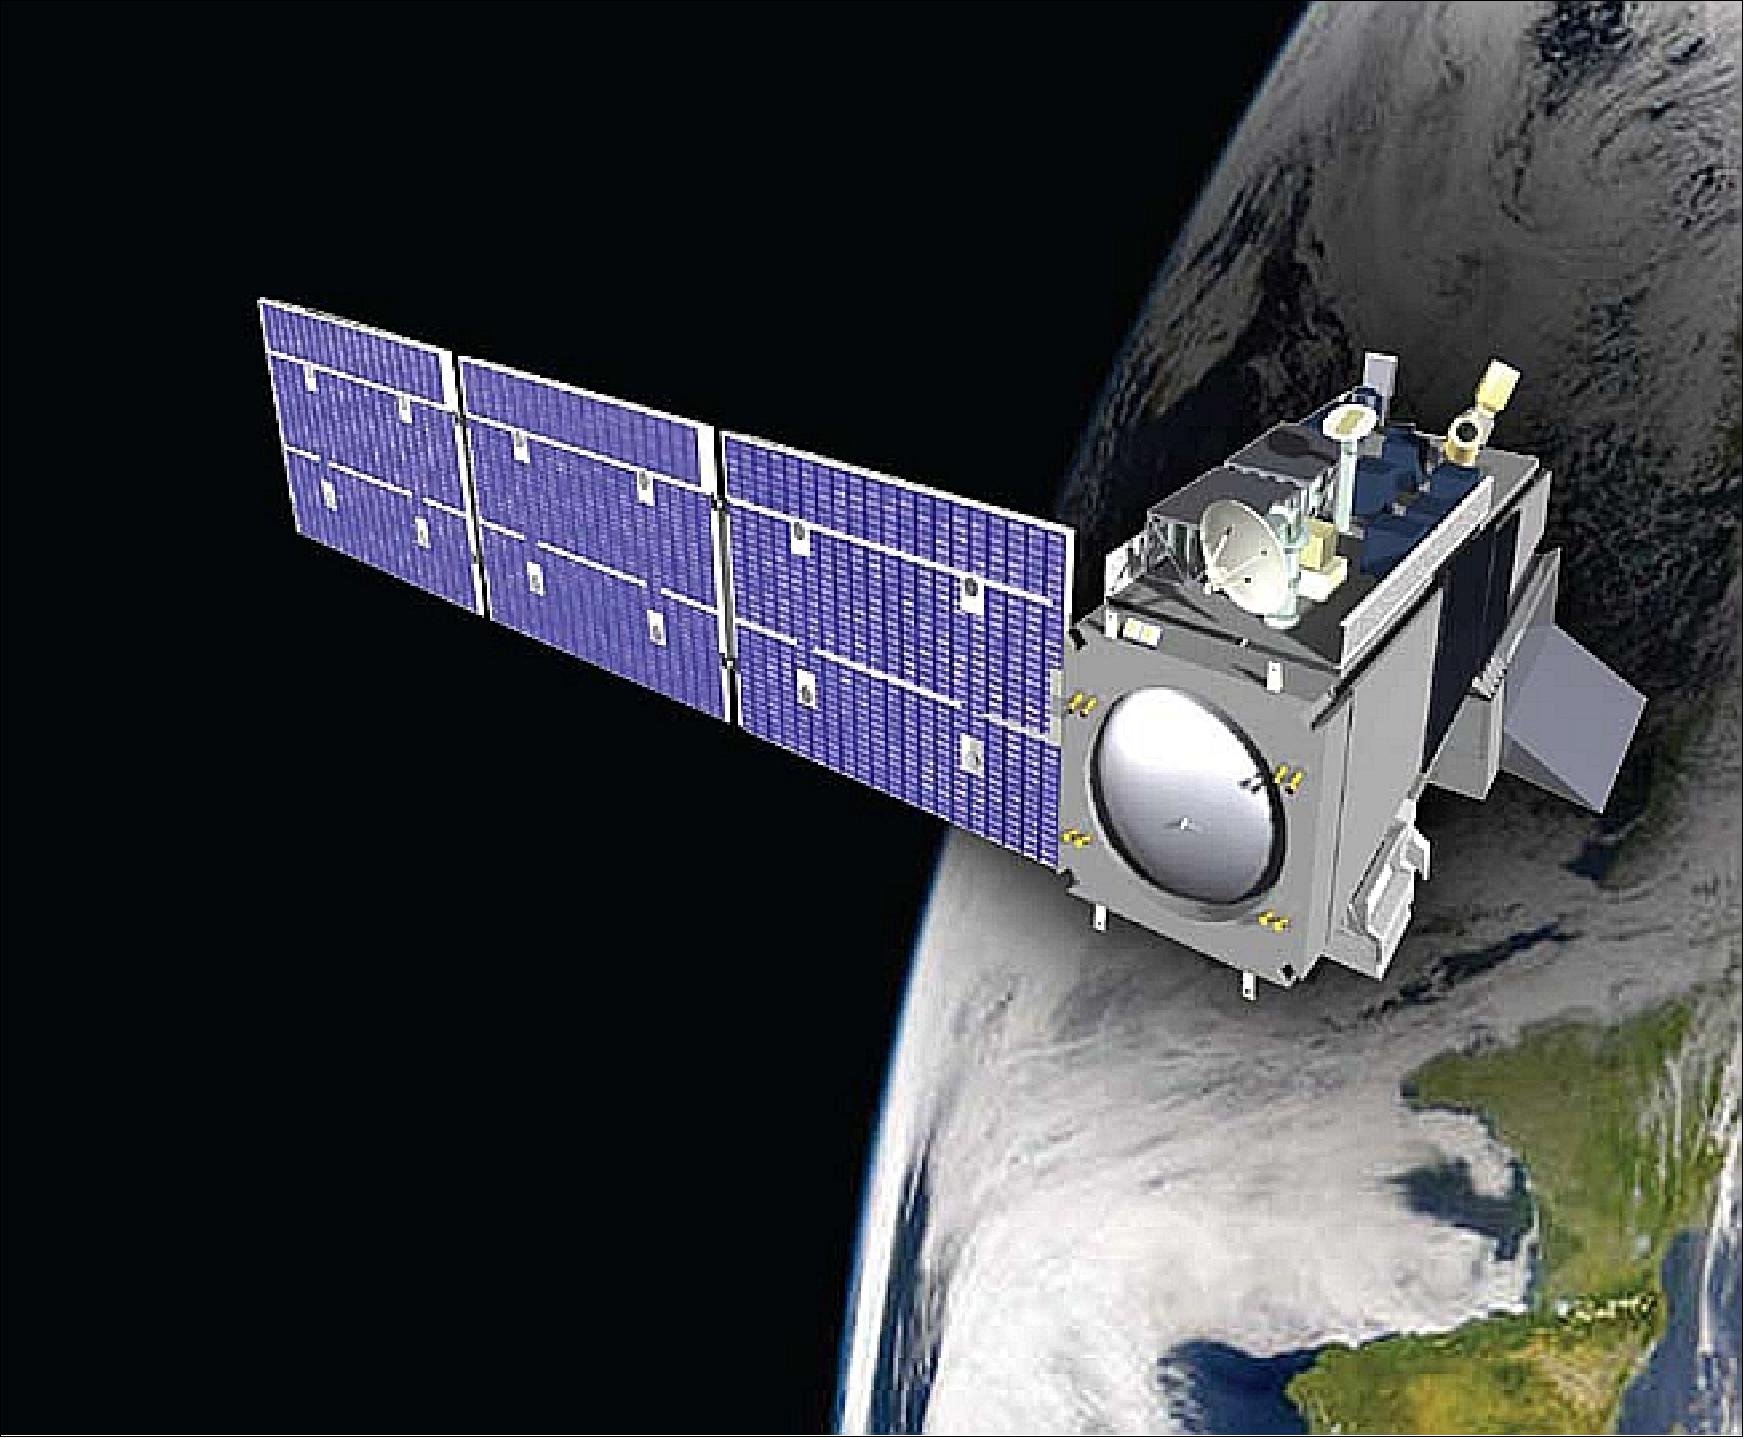 Figure 3: Artist's rendition of the deployed Suomi NPP spacecraft (image credit: BATC)